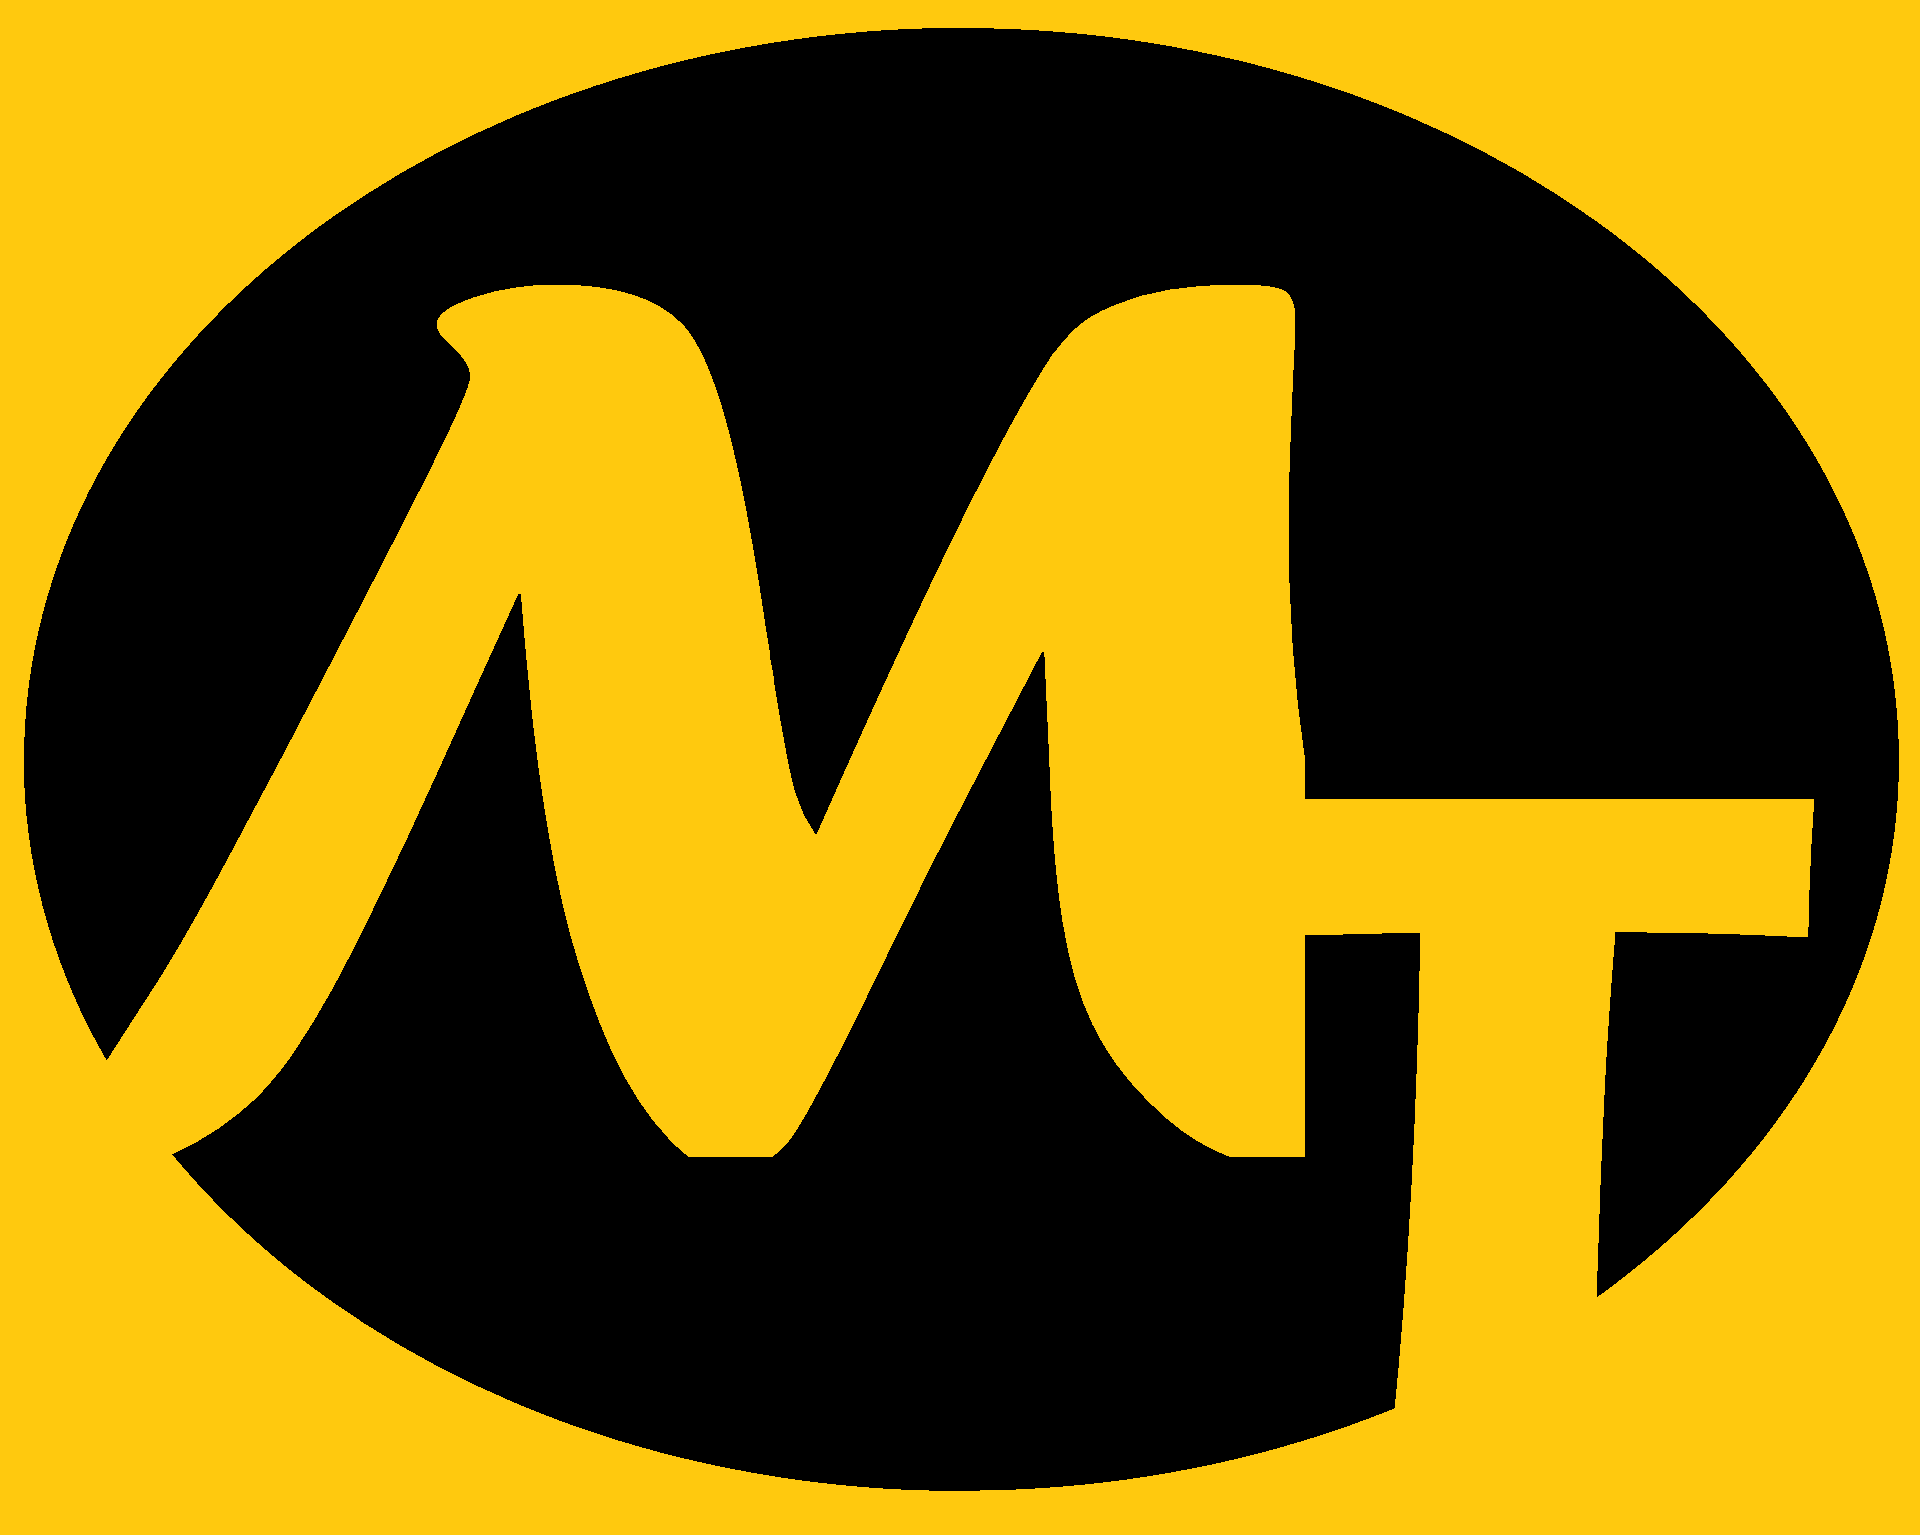 marketerteam logo | CustomerThink